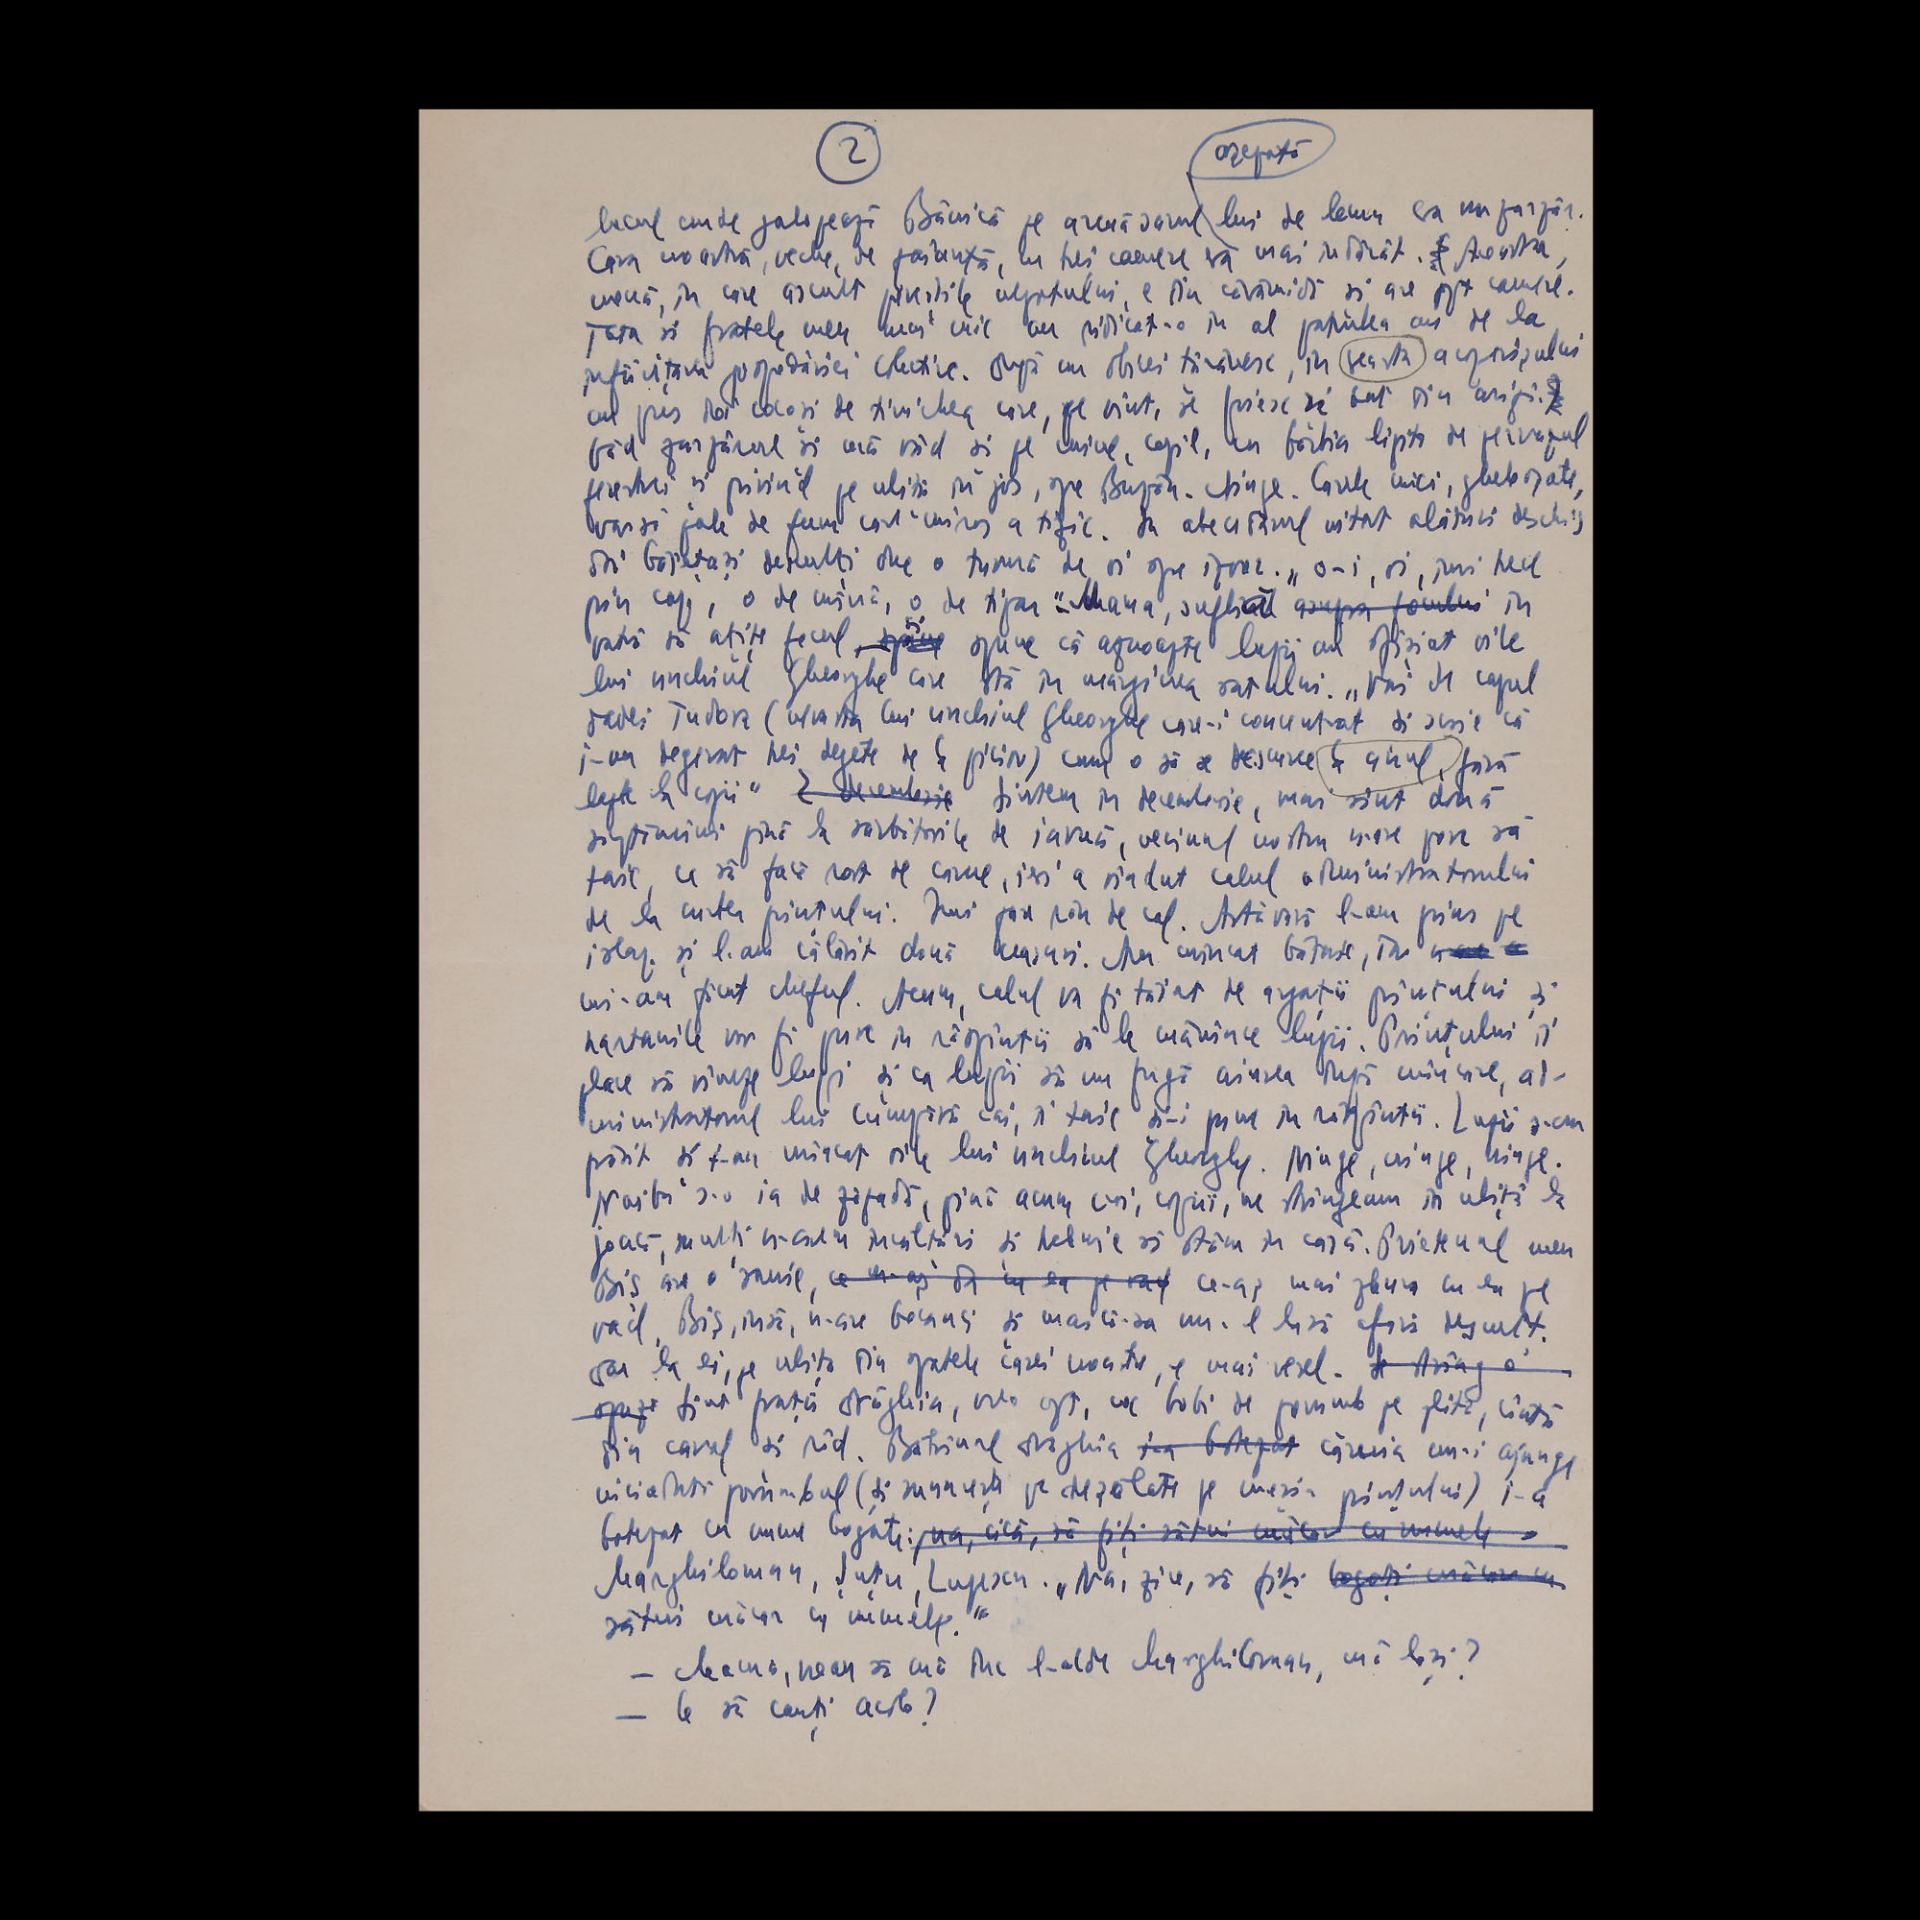 "Împliniri" manuscript, by F?nu? Neagu, 1970s, from the collection of the avant-garde poet Sa?a Pan?